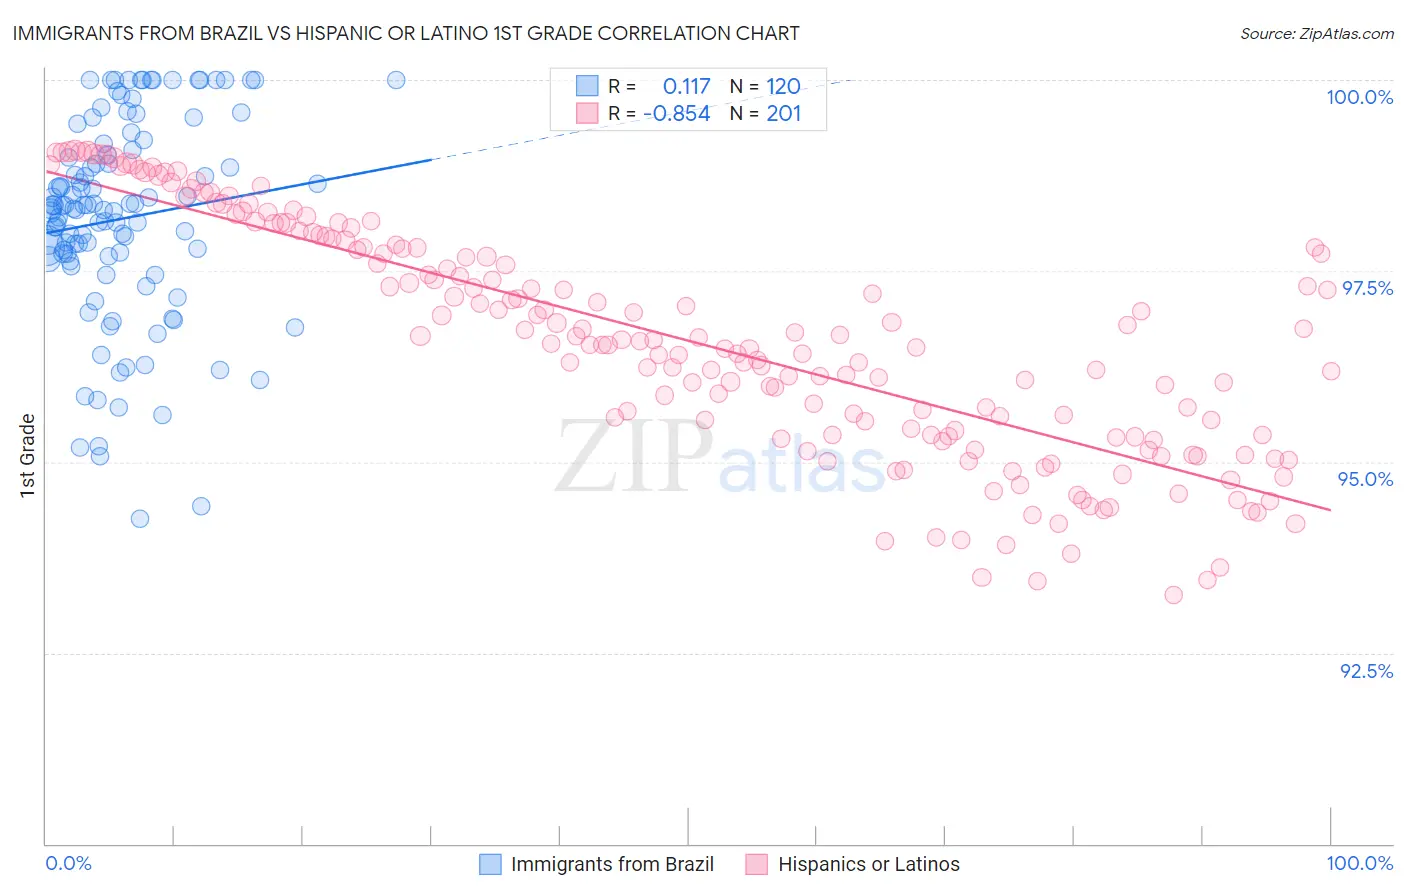 Immigrants from Brazil vs Hispanic or Latino 1st Grade